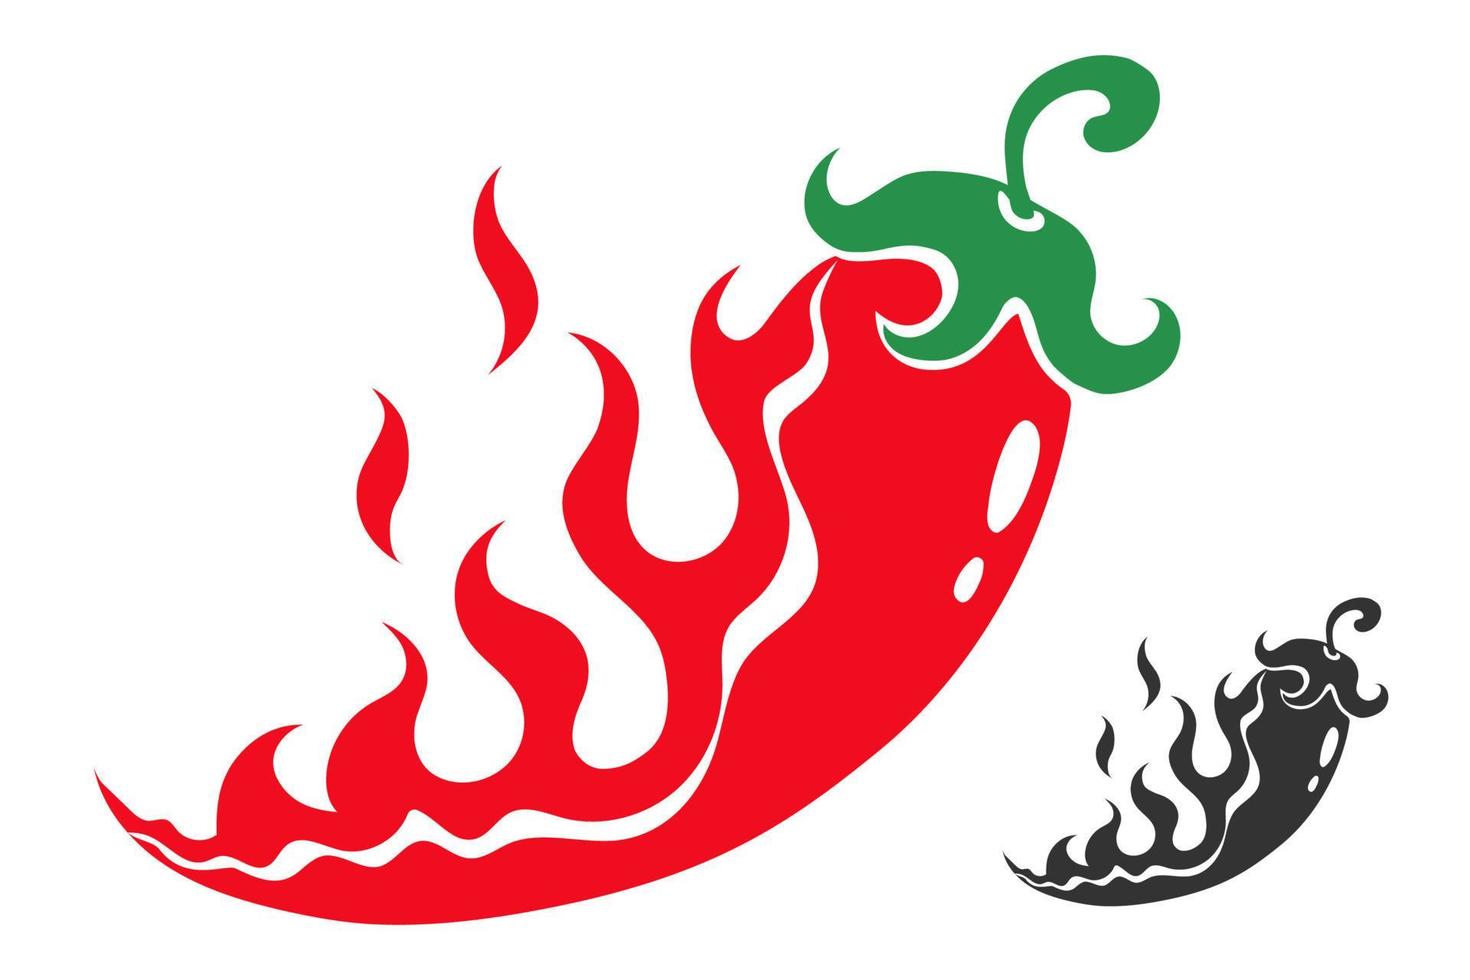 chili pepper in fire vector